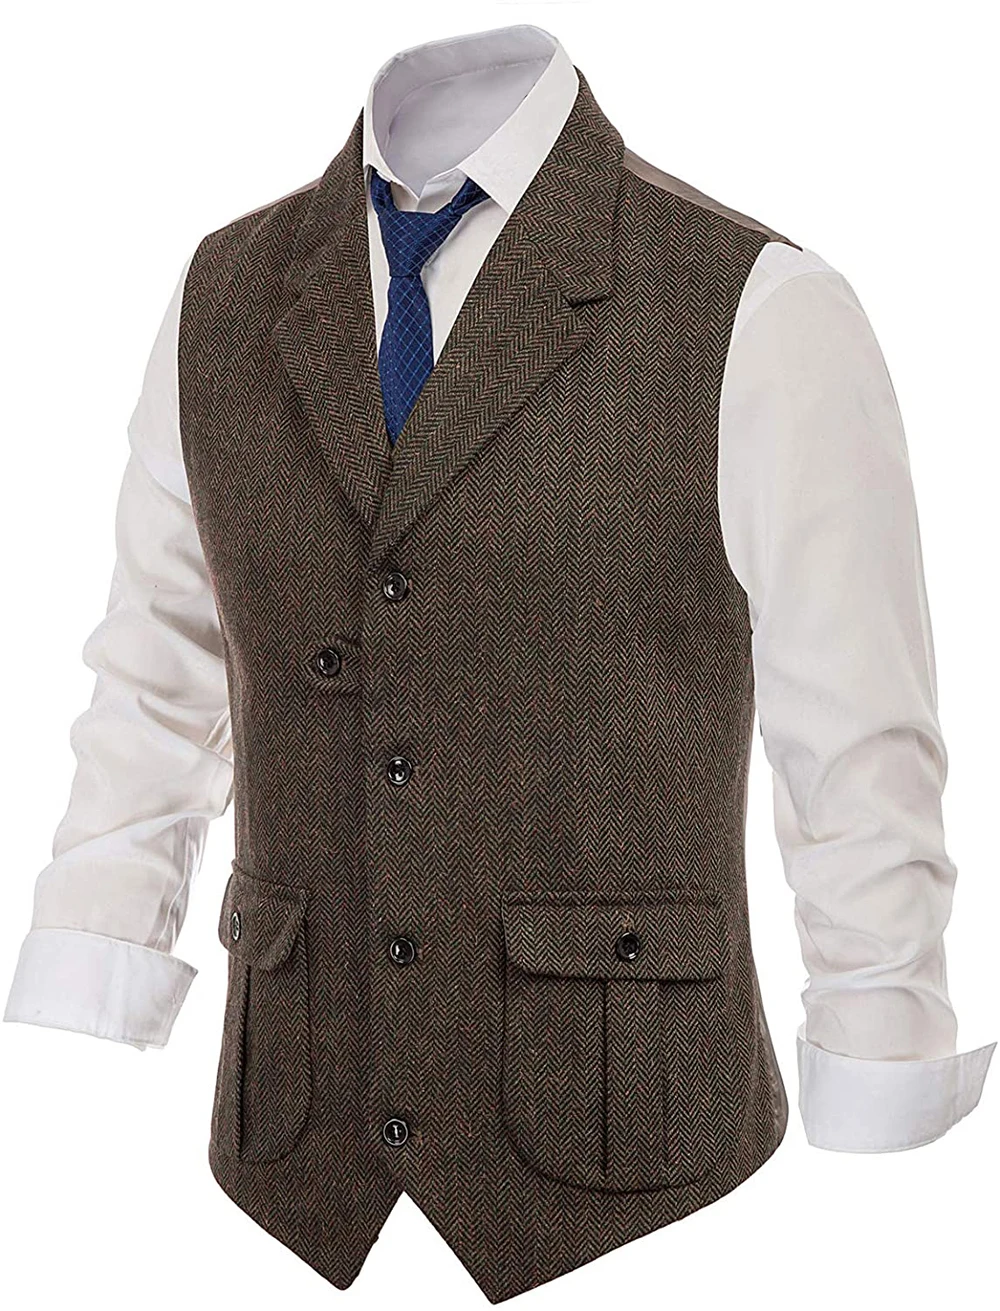 Men's Casual Suit Vest Notch Lapel with Two Pockets Herringbone Waistcoat for Wedding Groomsmen